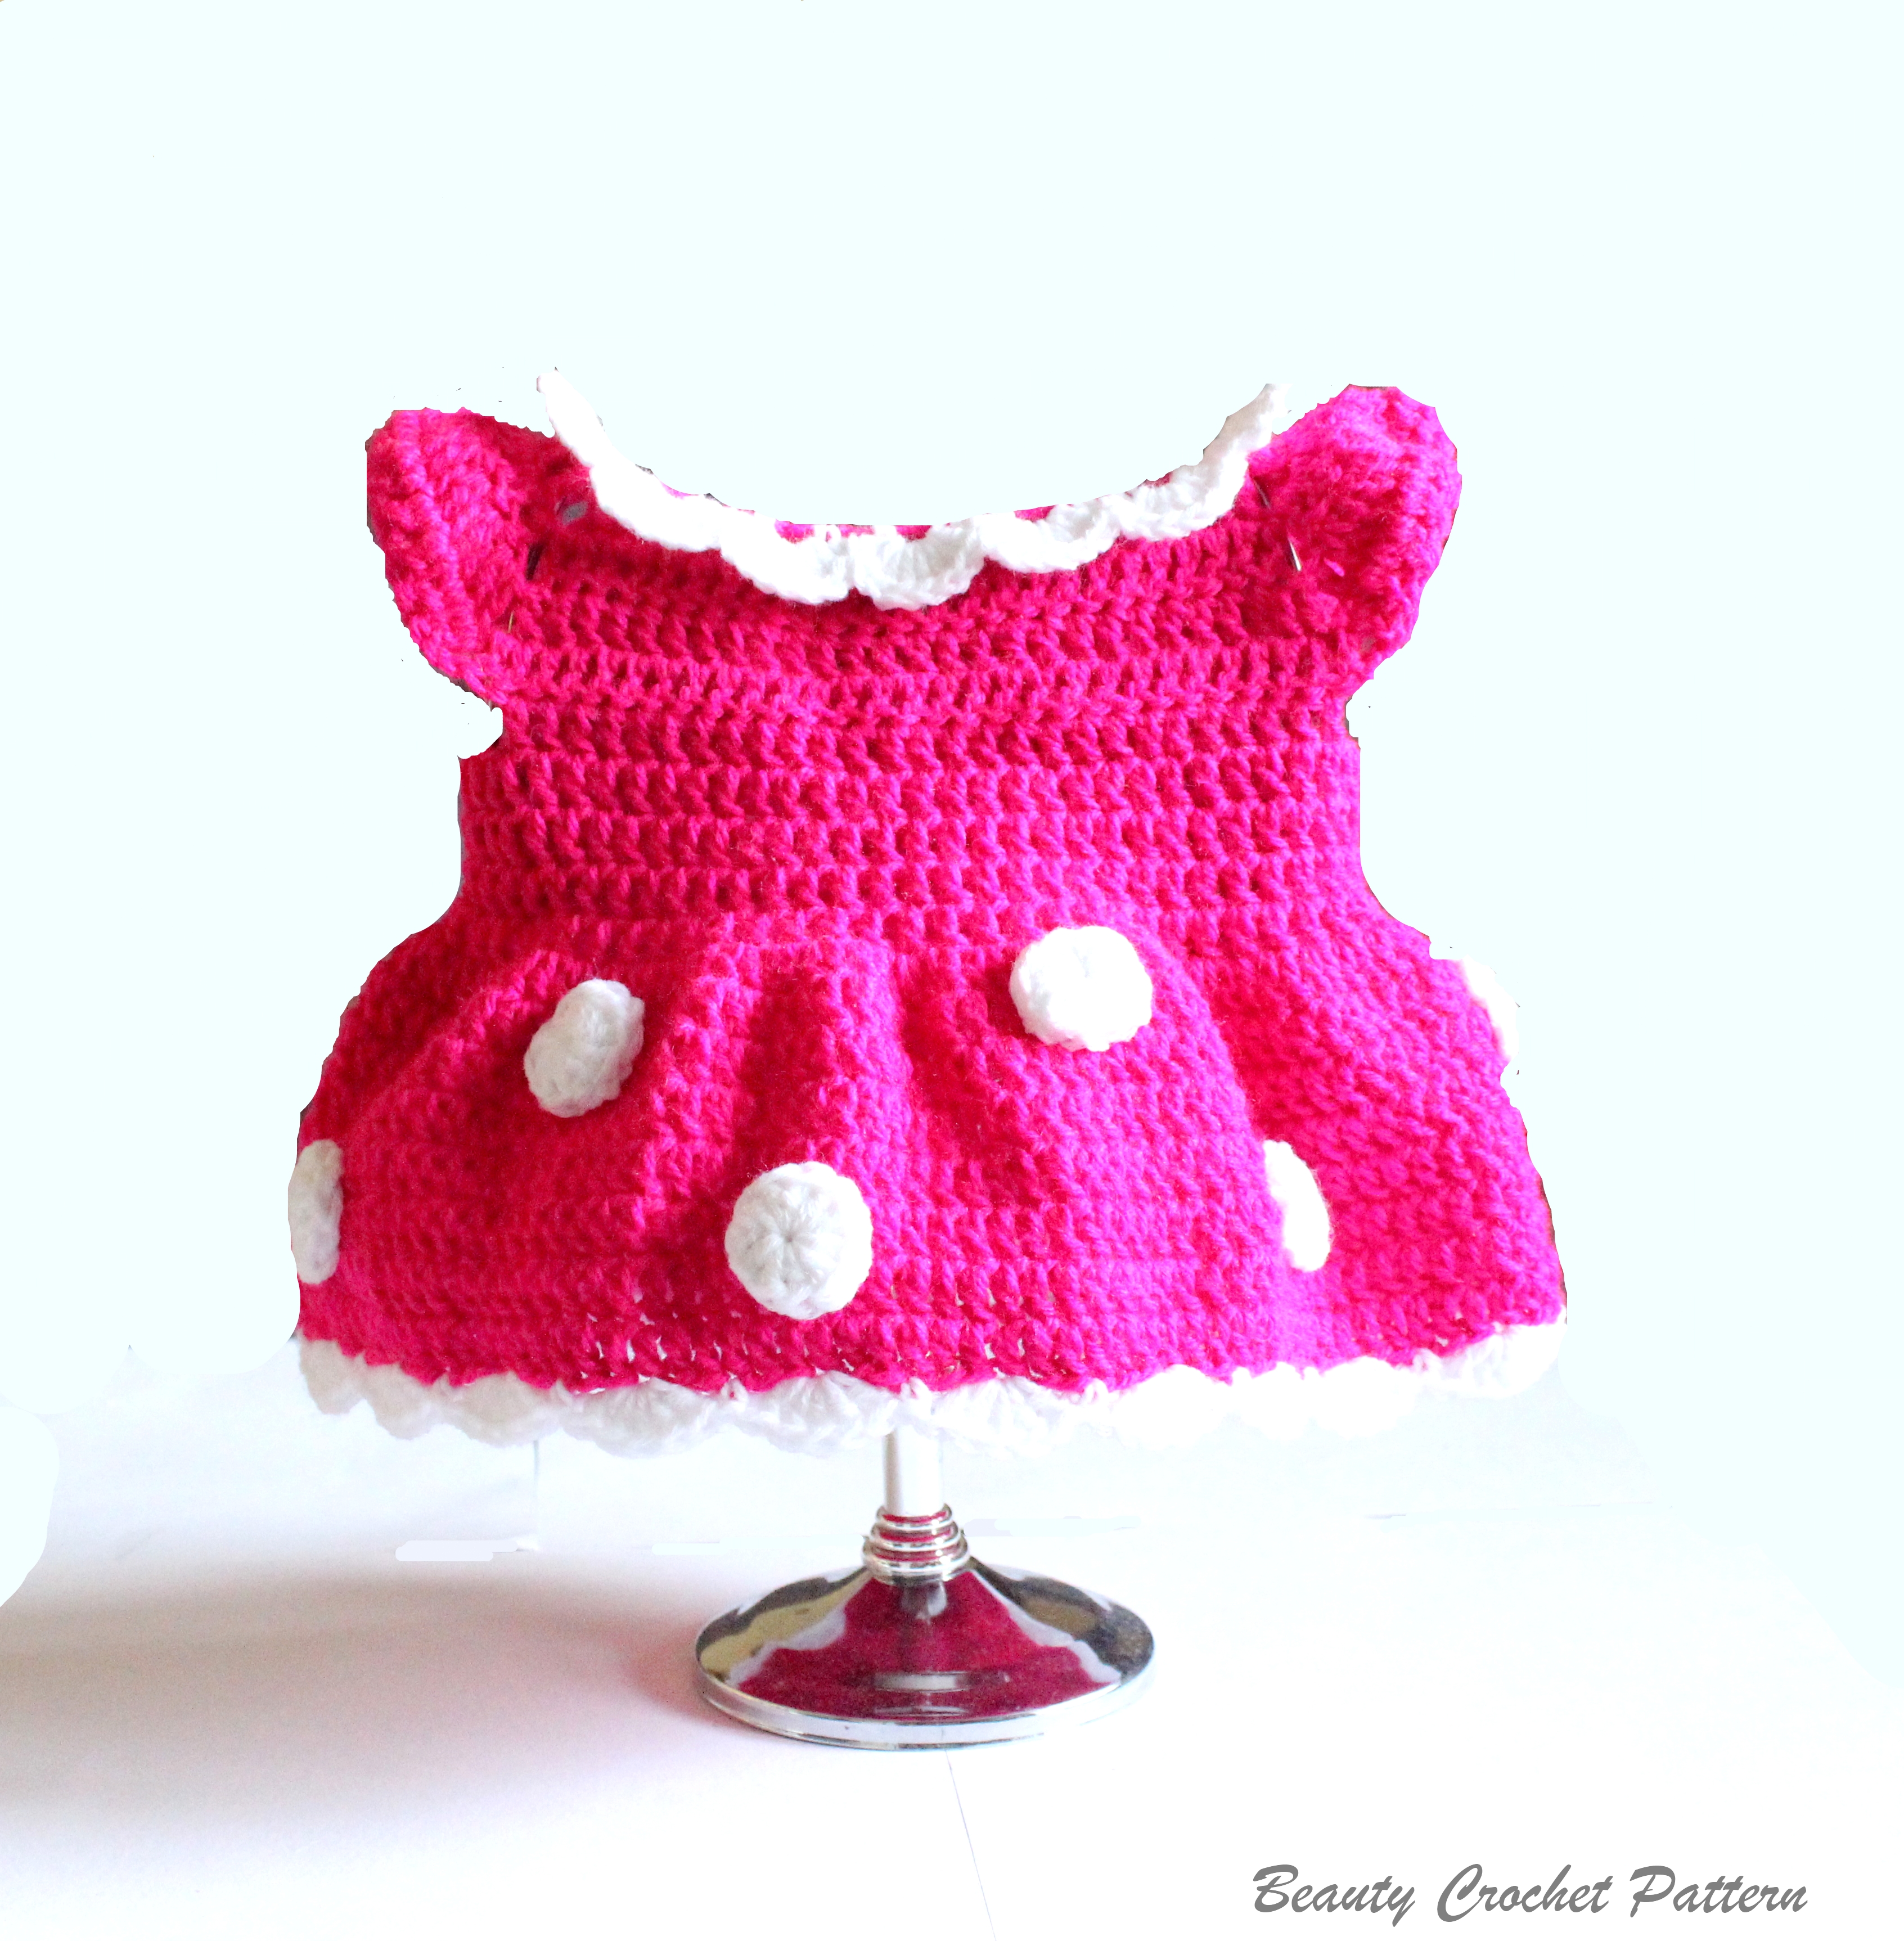 crochet minnie mouse dress